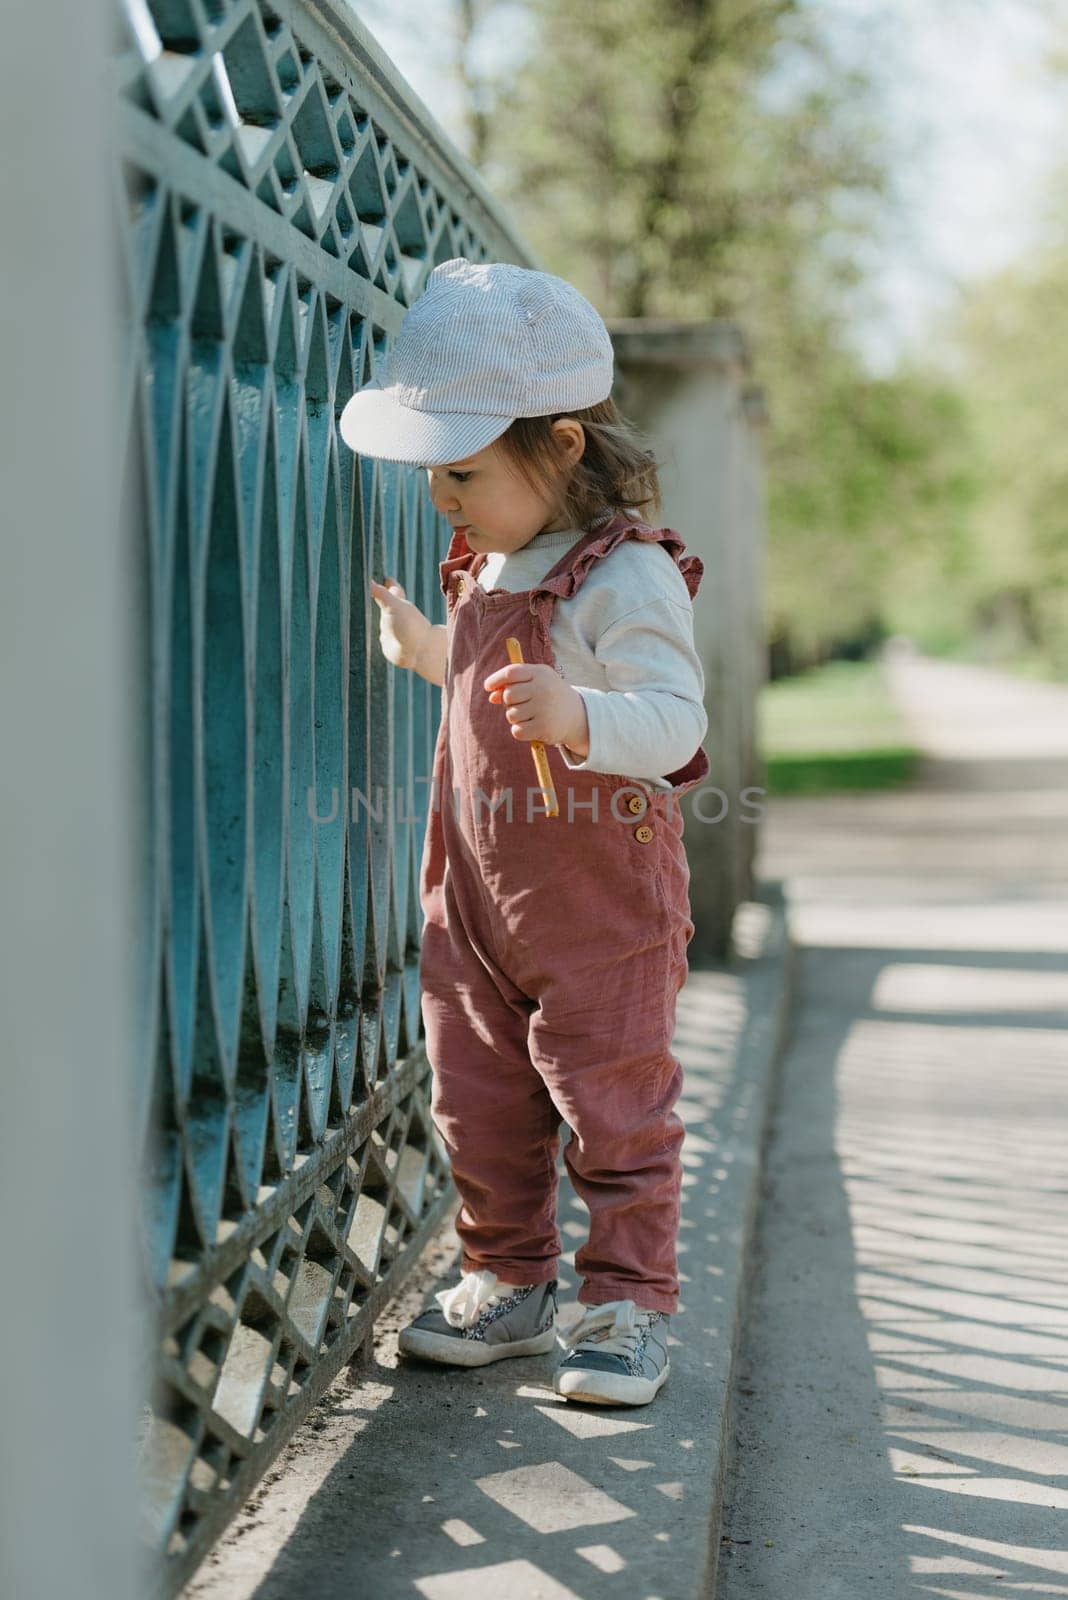 A female toddler walks near the garden bridge fence. by RomanJRoyce